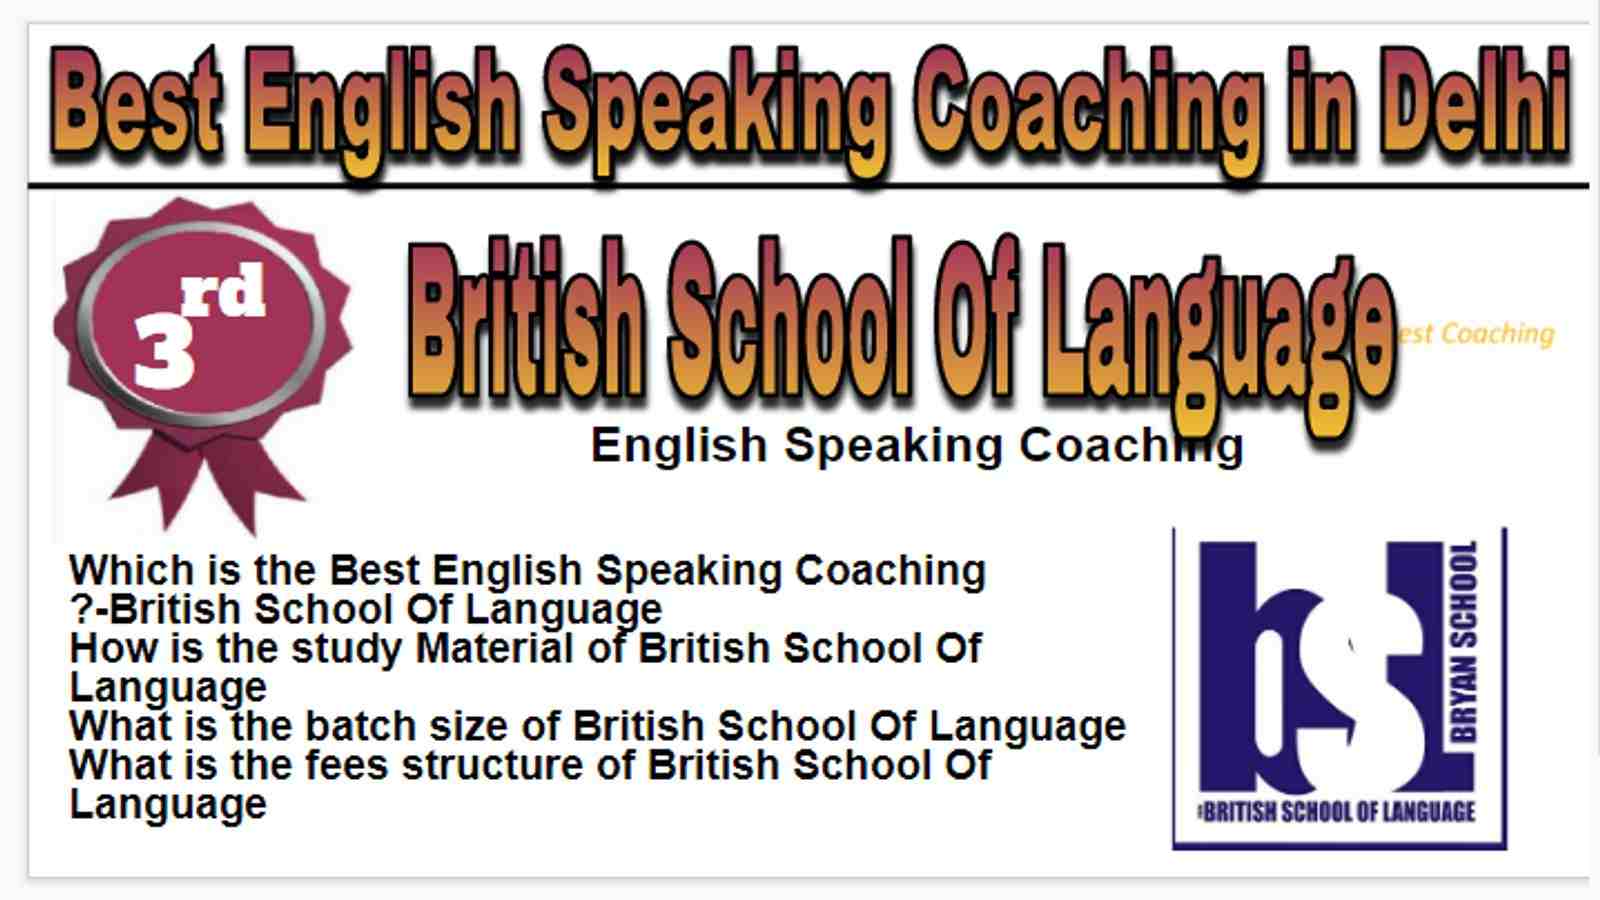 Rank 3 Best English Speaking Coaching in Delhi